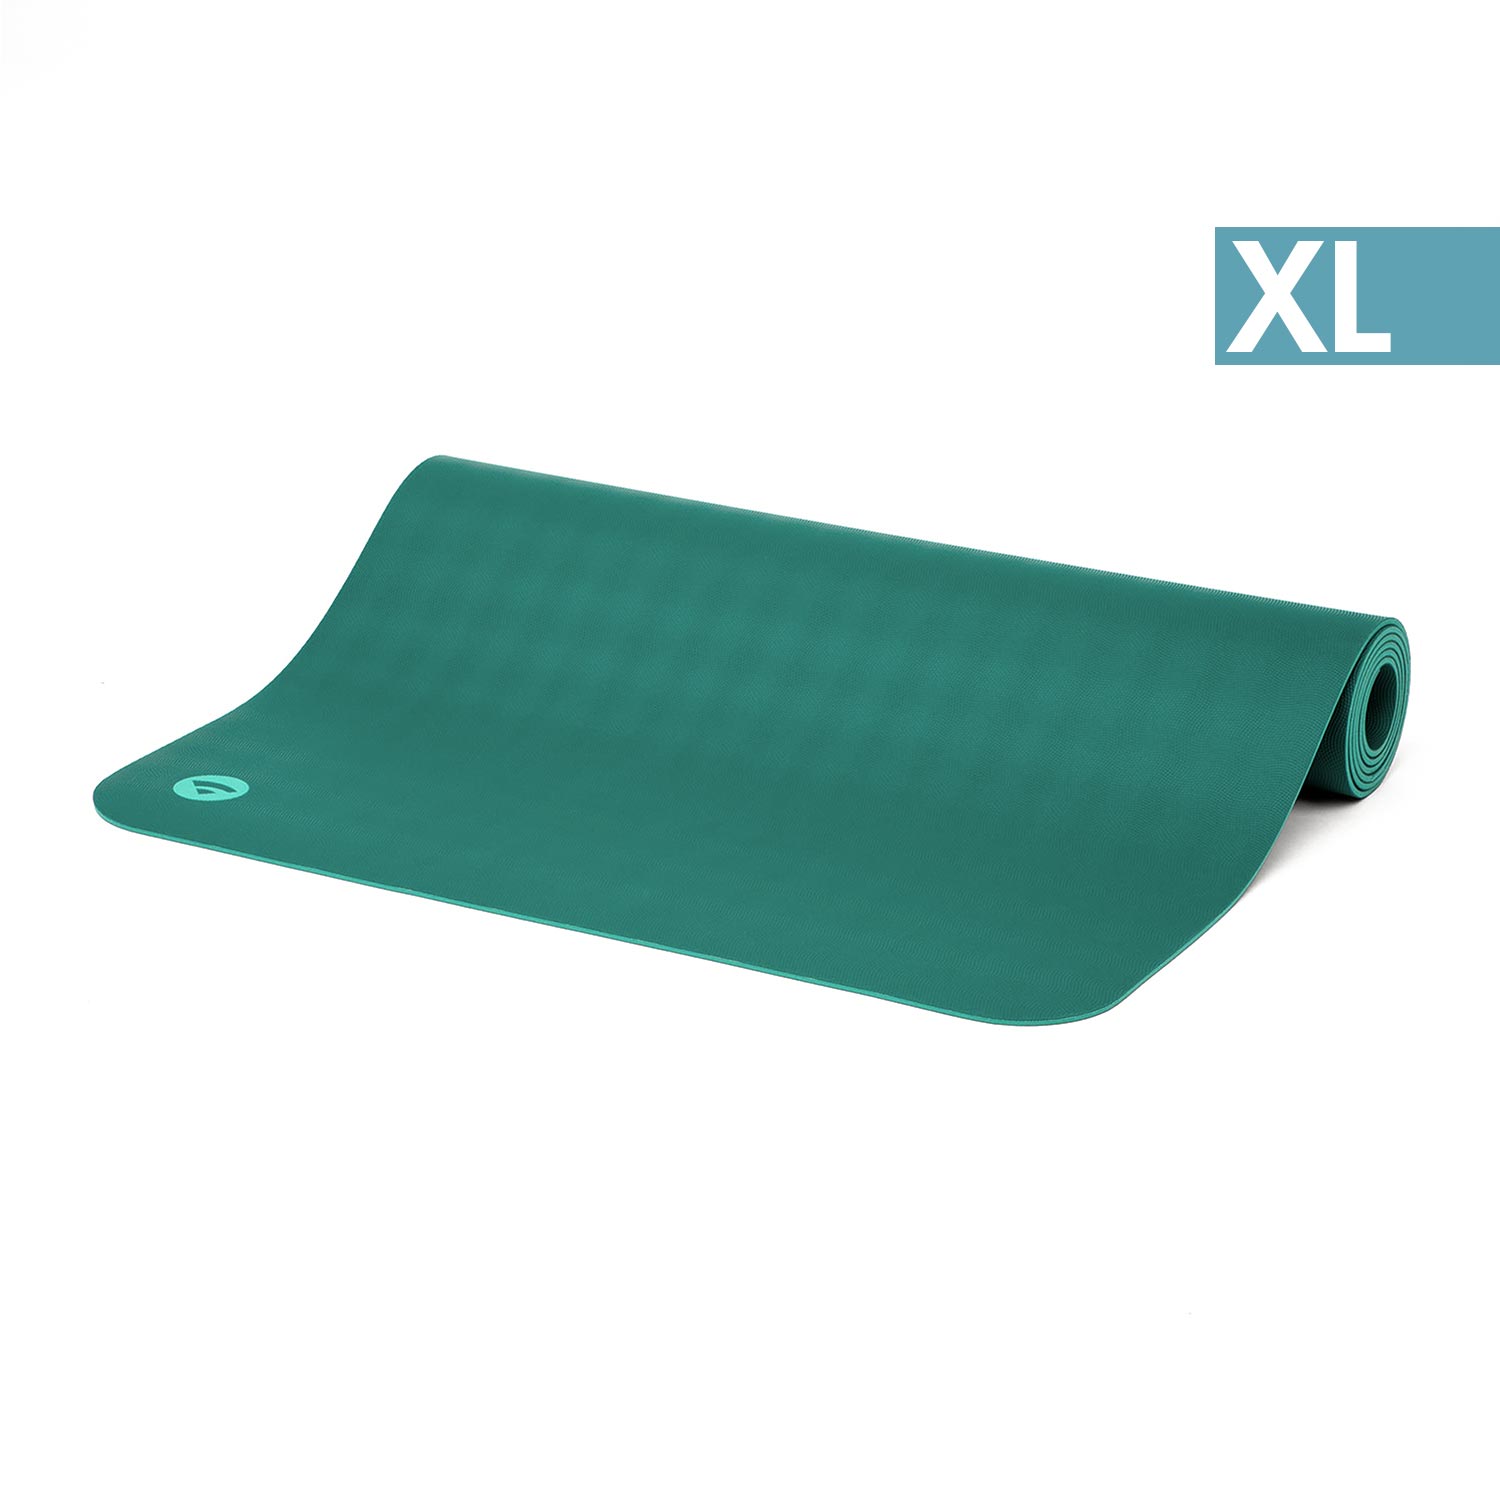 Pro Eco Mat - Natural Rubber XL